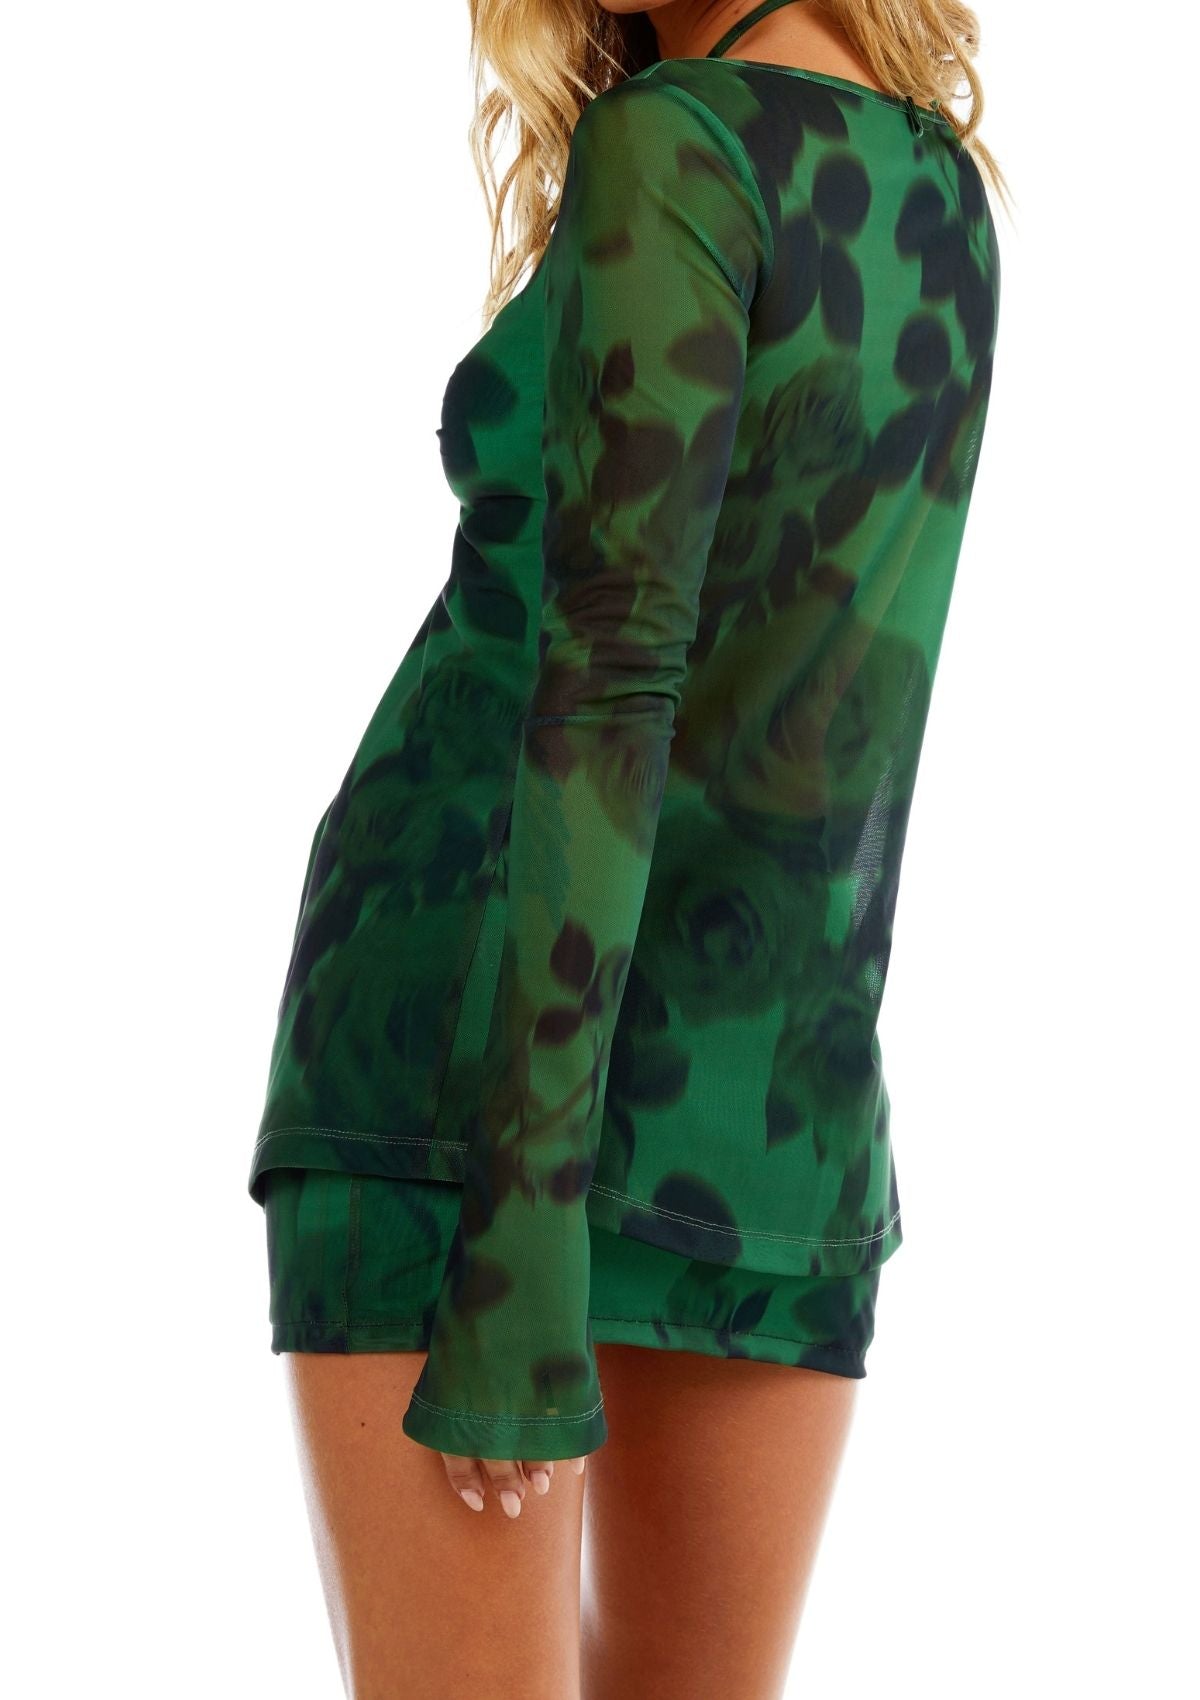 Thorne Low Rise Mini Skirt Mesh Black and Green Floral Skirt